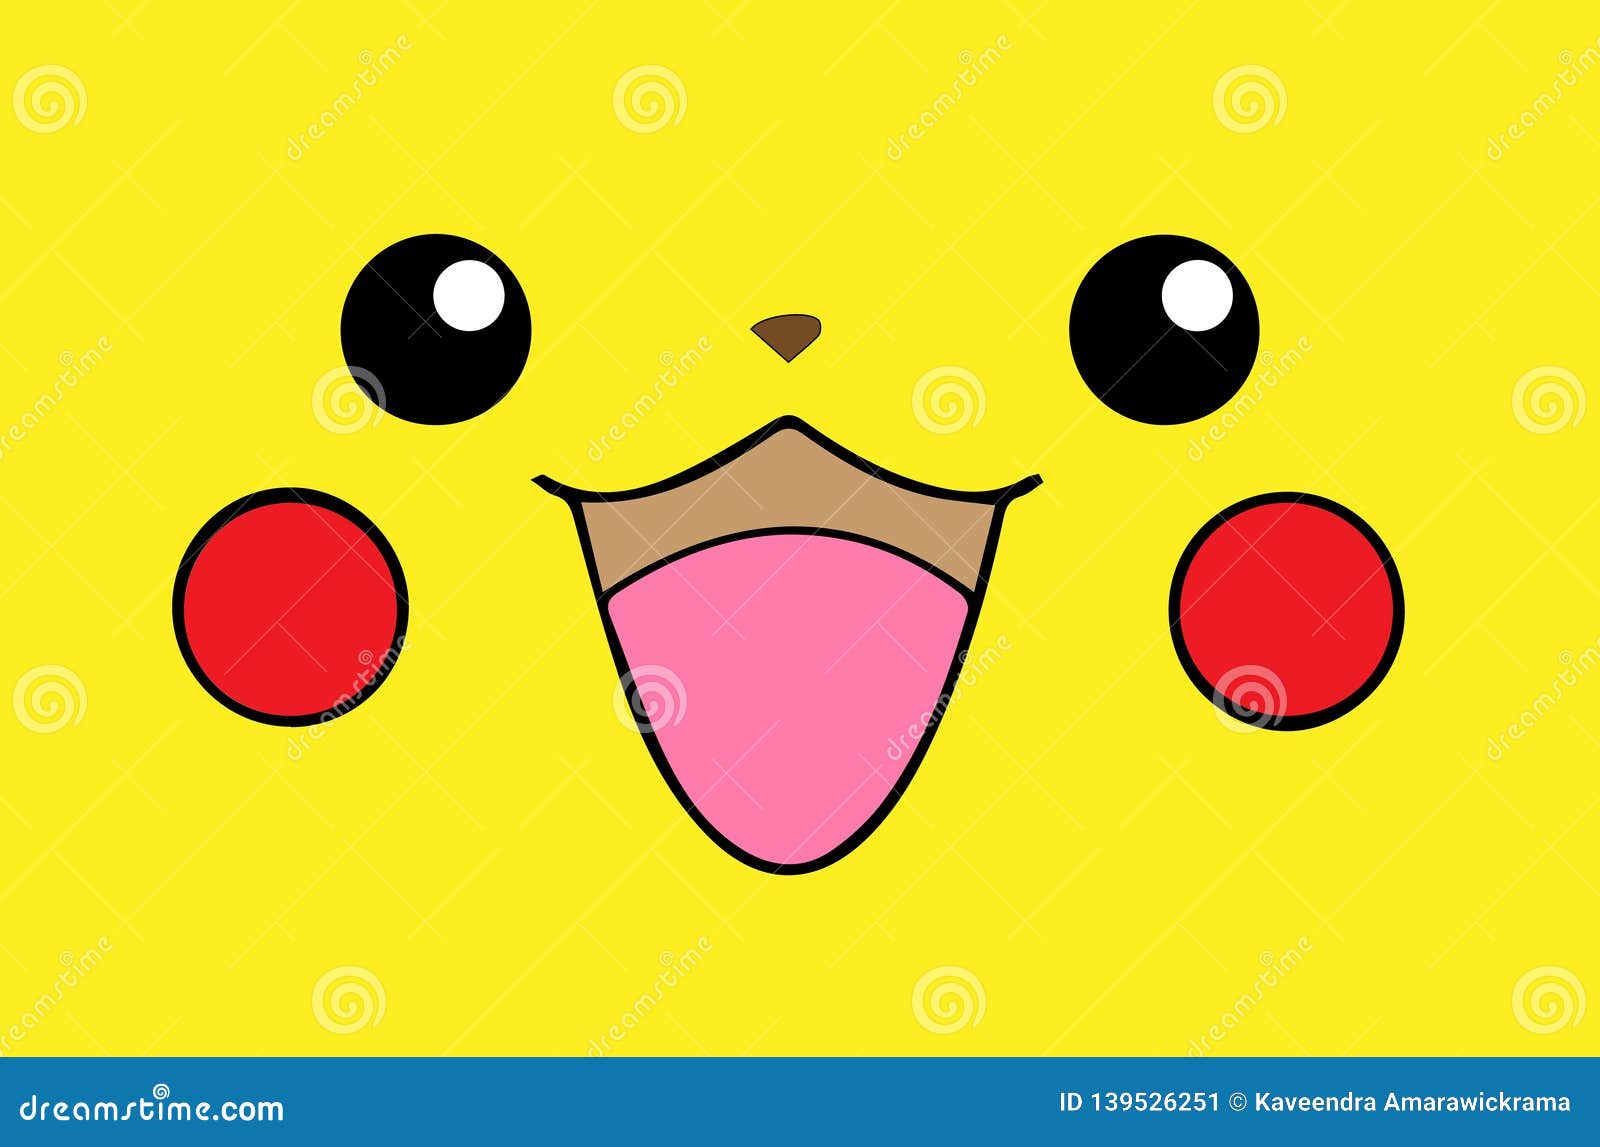 coisa fofas png - Pesquisa Google  Pikachu adorable, Imagenes de pikachu  tierno, Pikachu